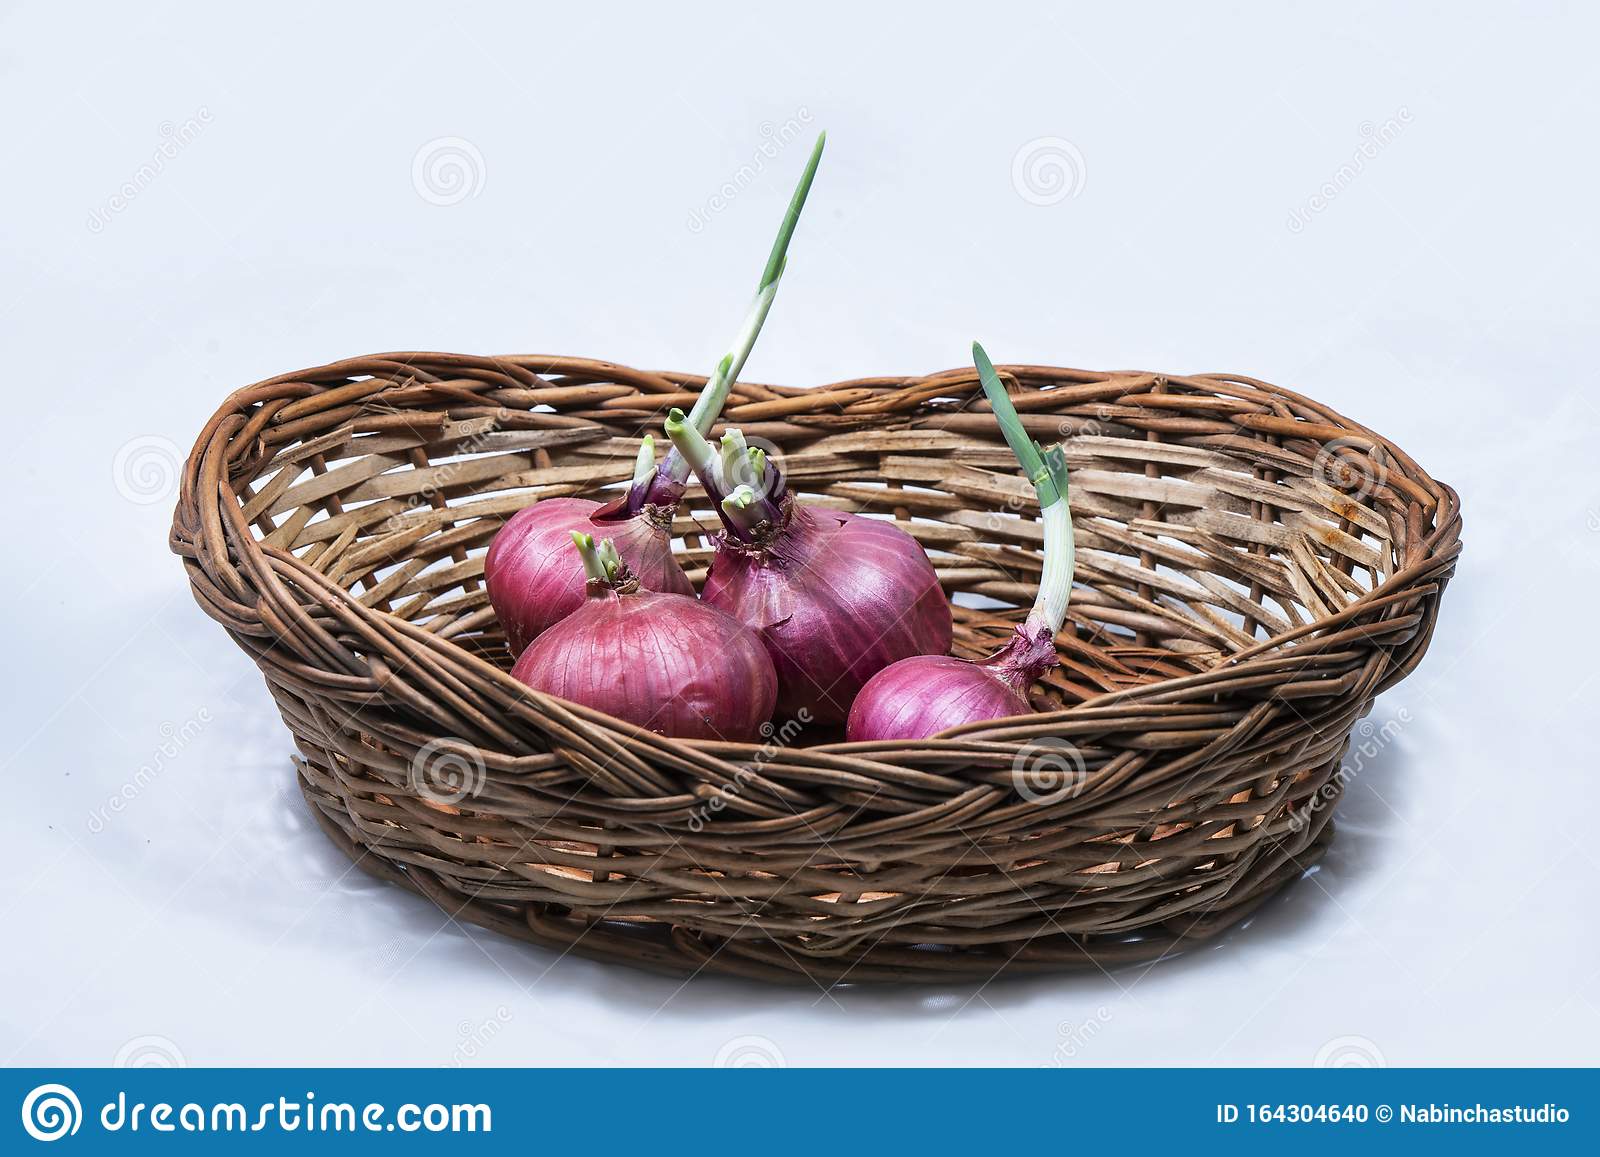 Http krmp.cc onion market 2559